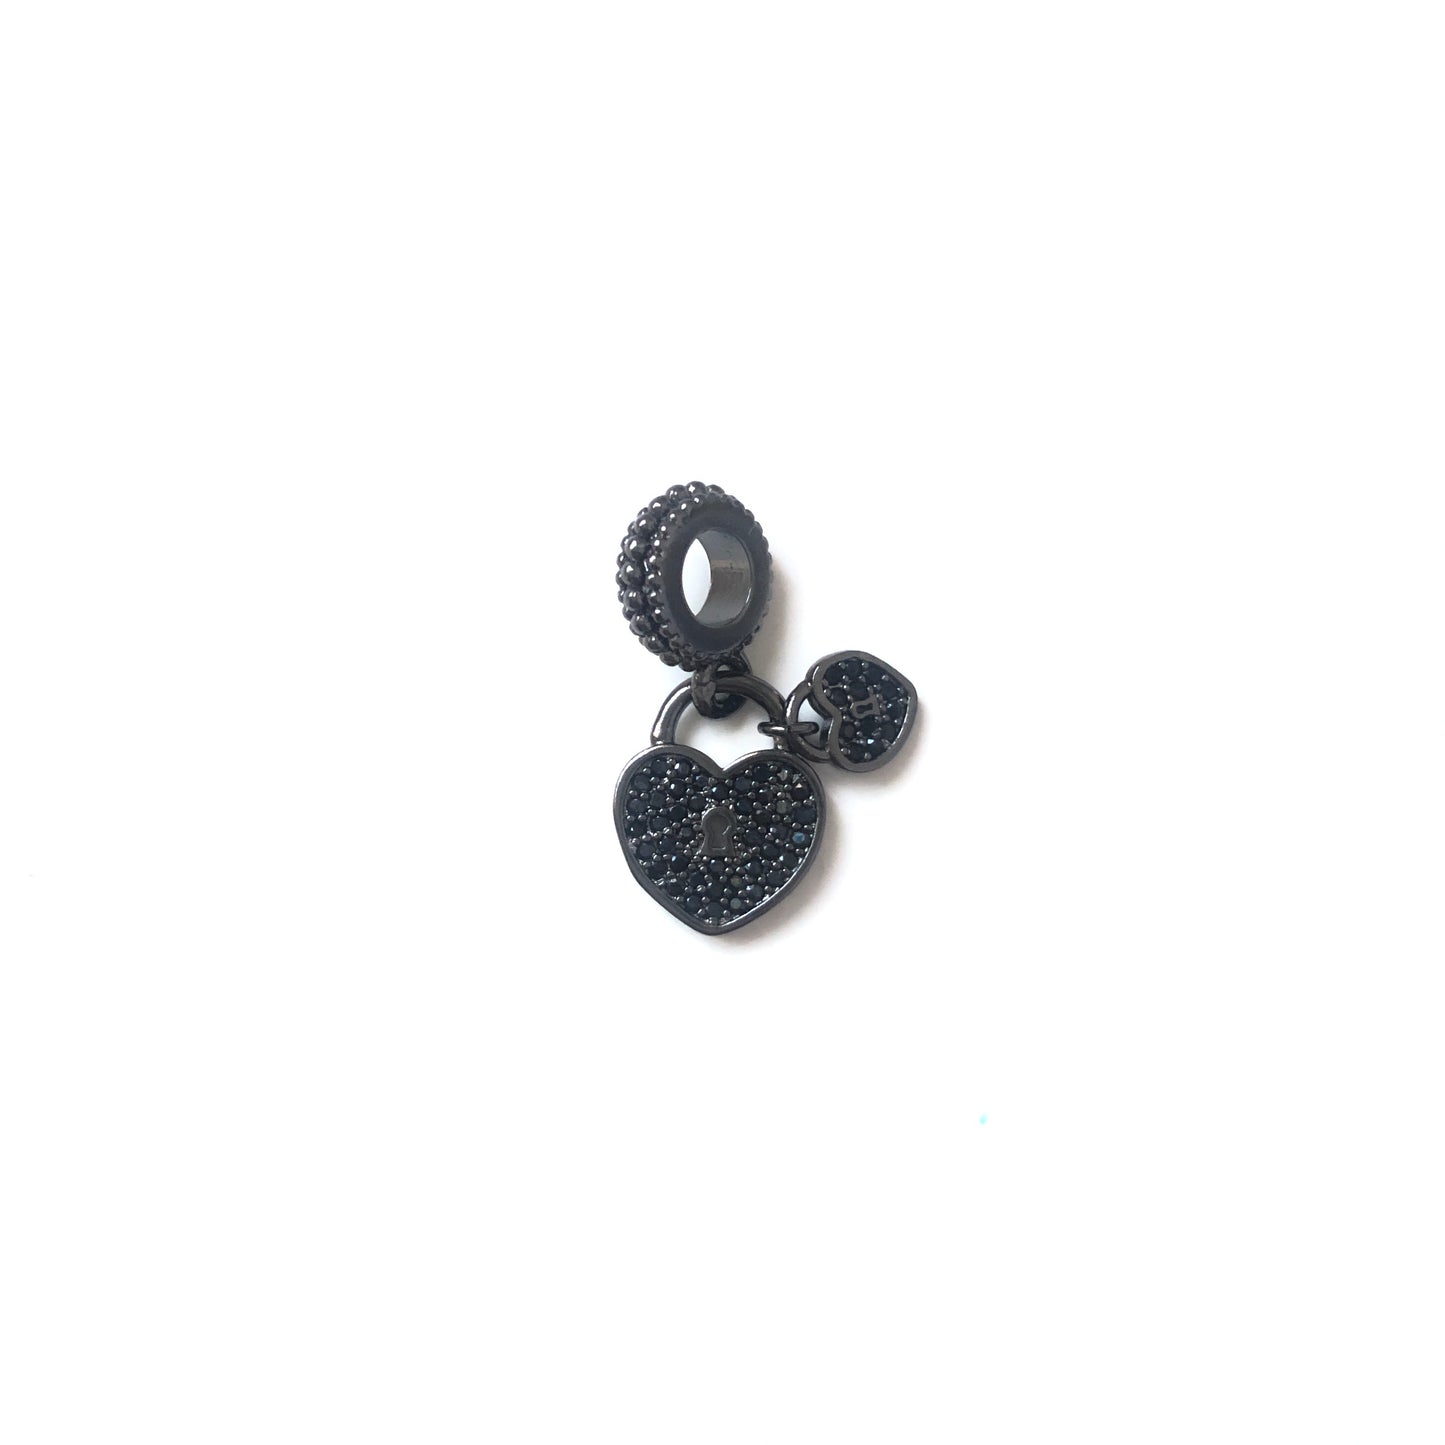 10pcs/lot 23*11mm CZ Paved Double Heart Lock Charms Black on Black CZ Paved Charms Hearts Charms Beads Beyond